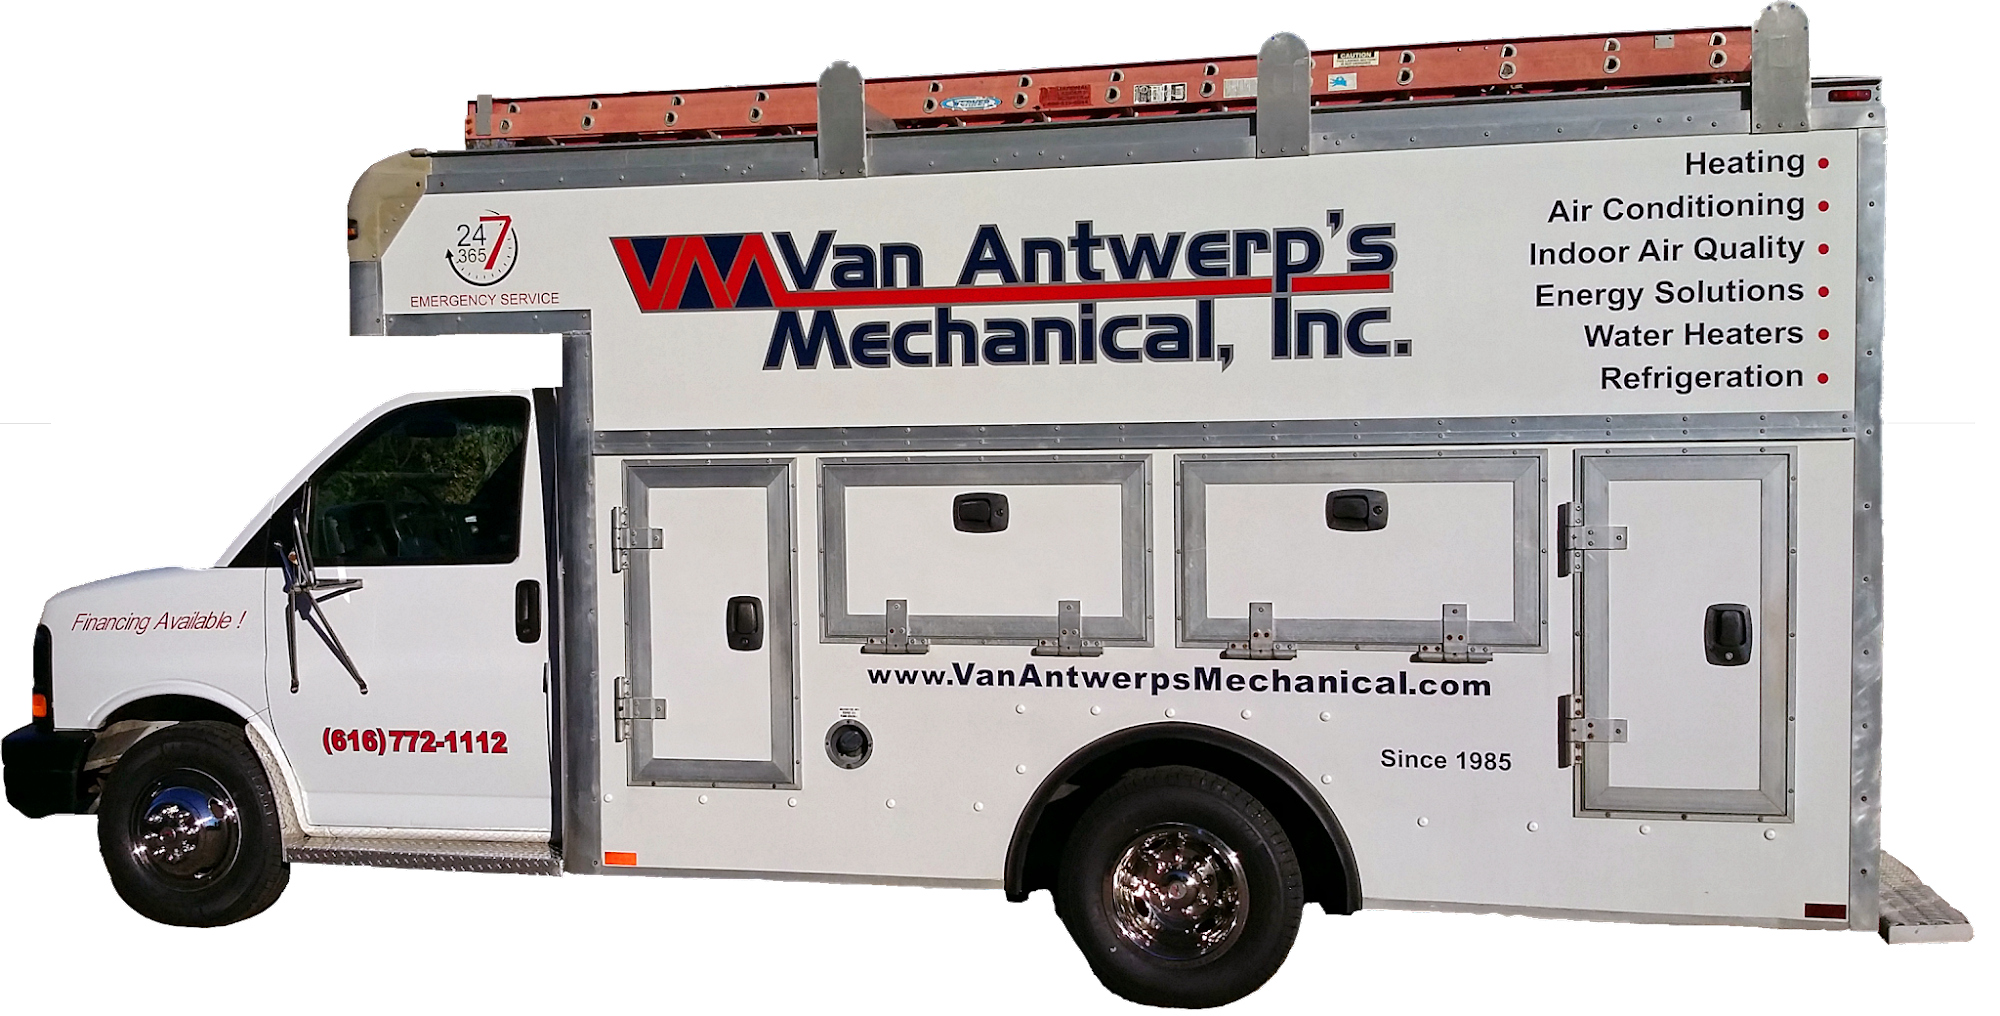 Van Antwerp's Mechanical, Heating, Cooling & Commercial Refrigeration